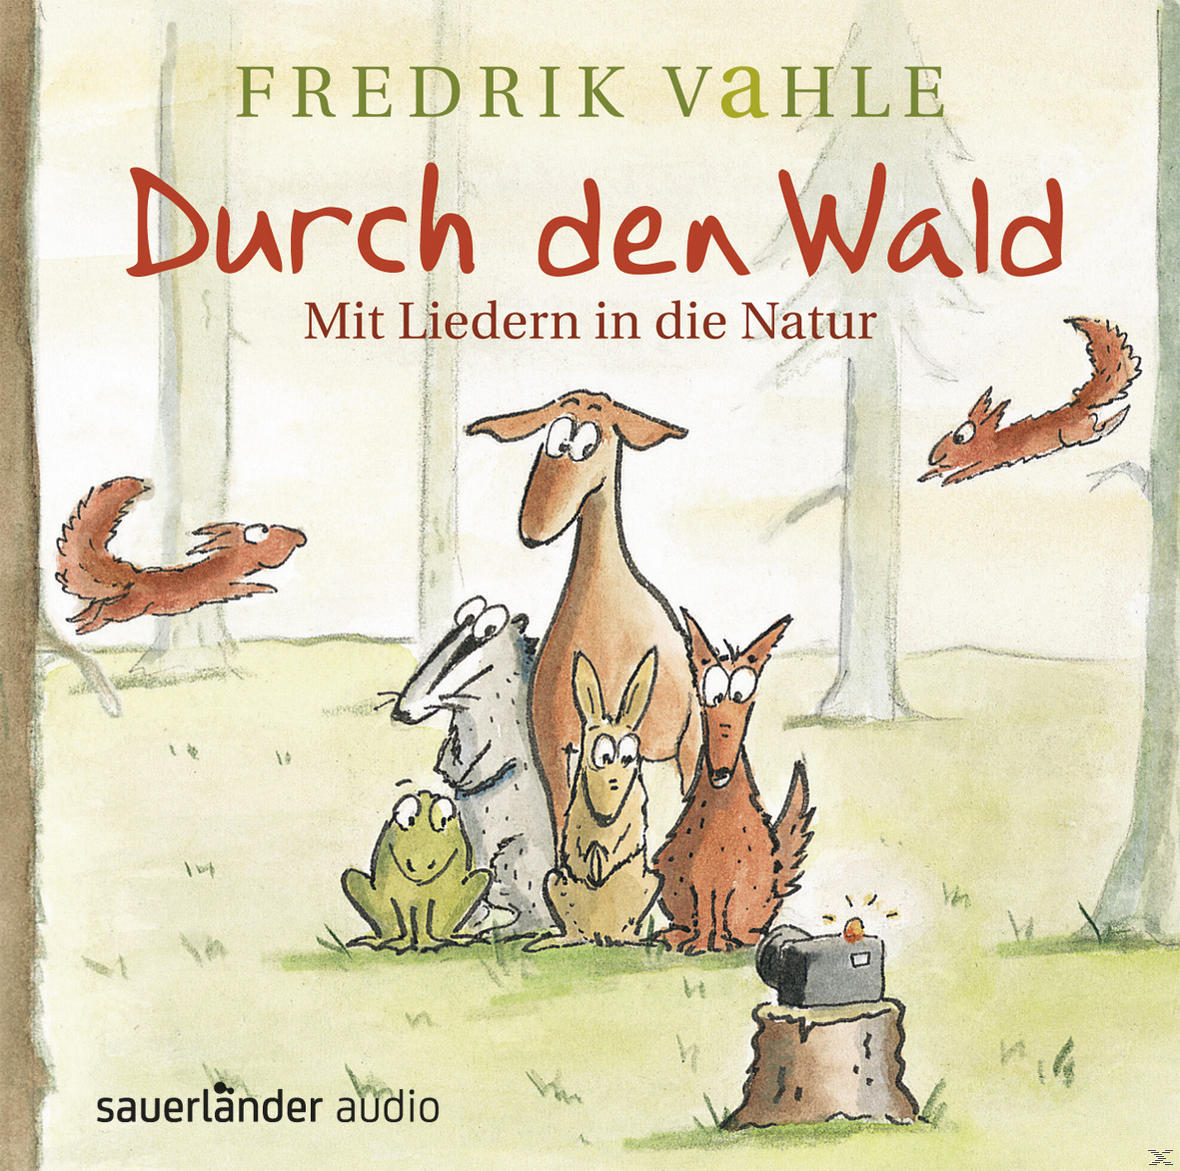 den Durch (CD) Vahle ... - Fredrik Wald -